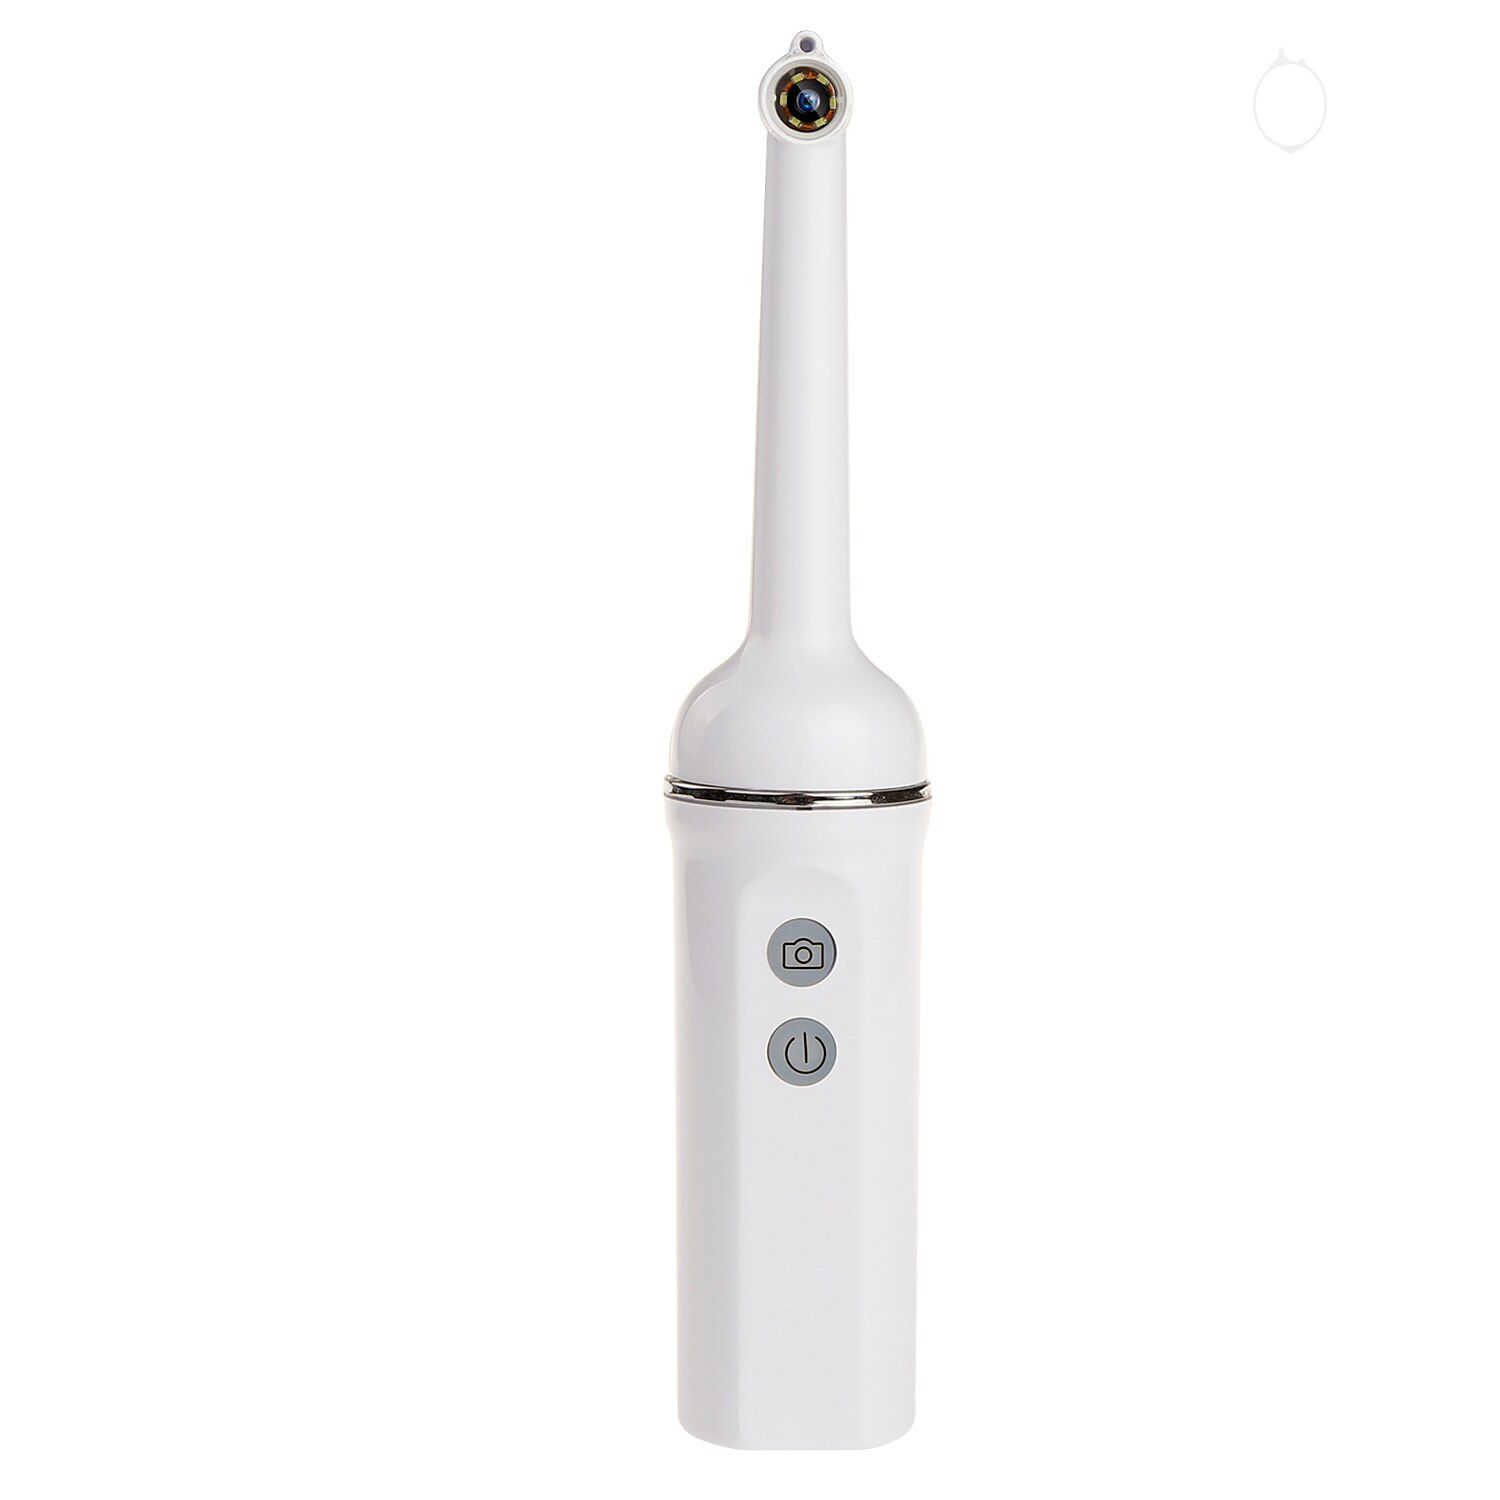 Wireless WiFi USB Intra Oral Dental Camera Intraoral 1080p Industrial Endoscope Inspection for Dentist  fotografica odontologia